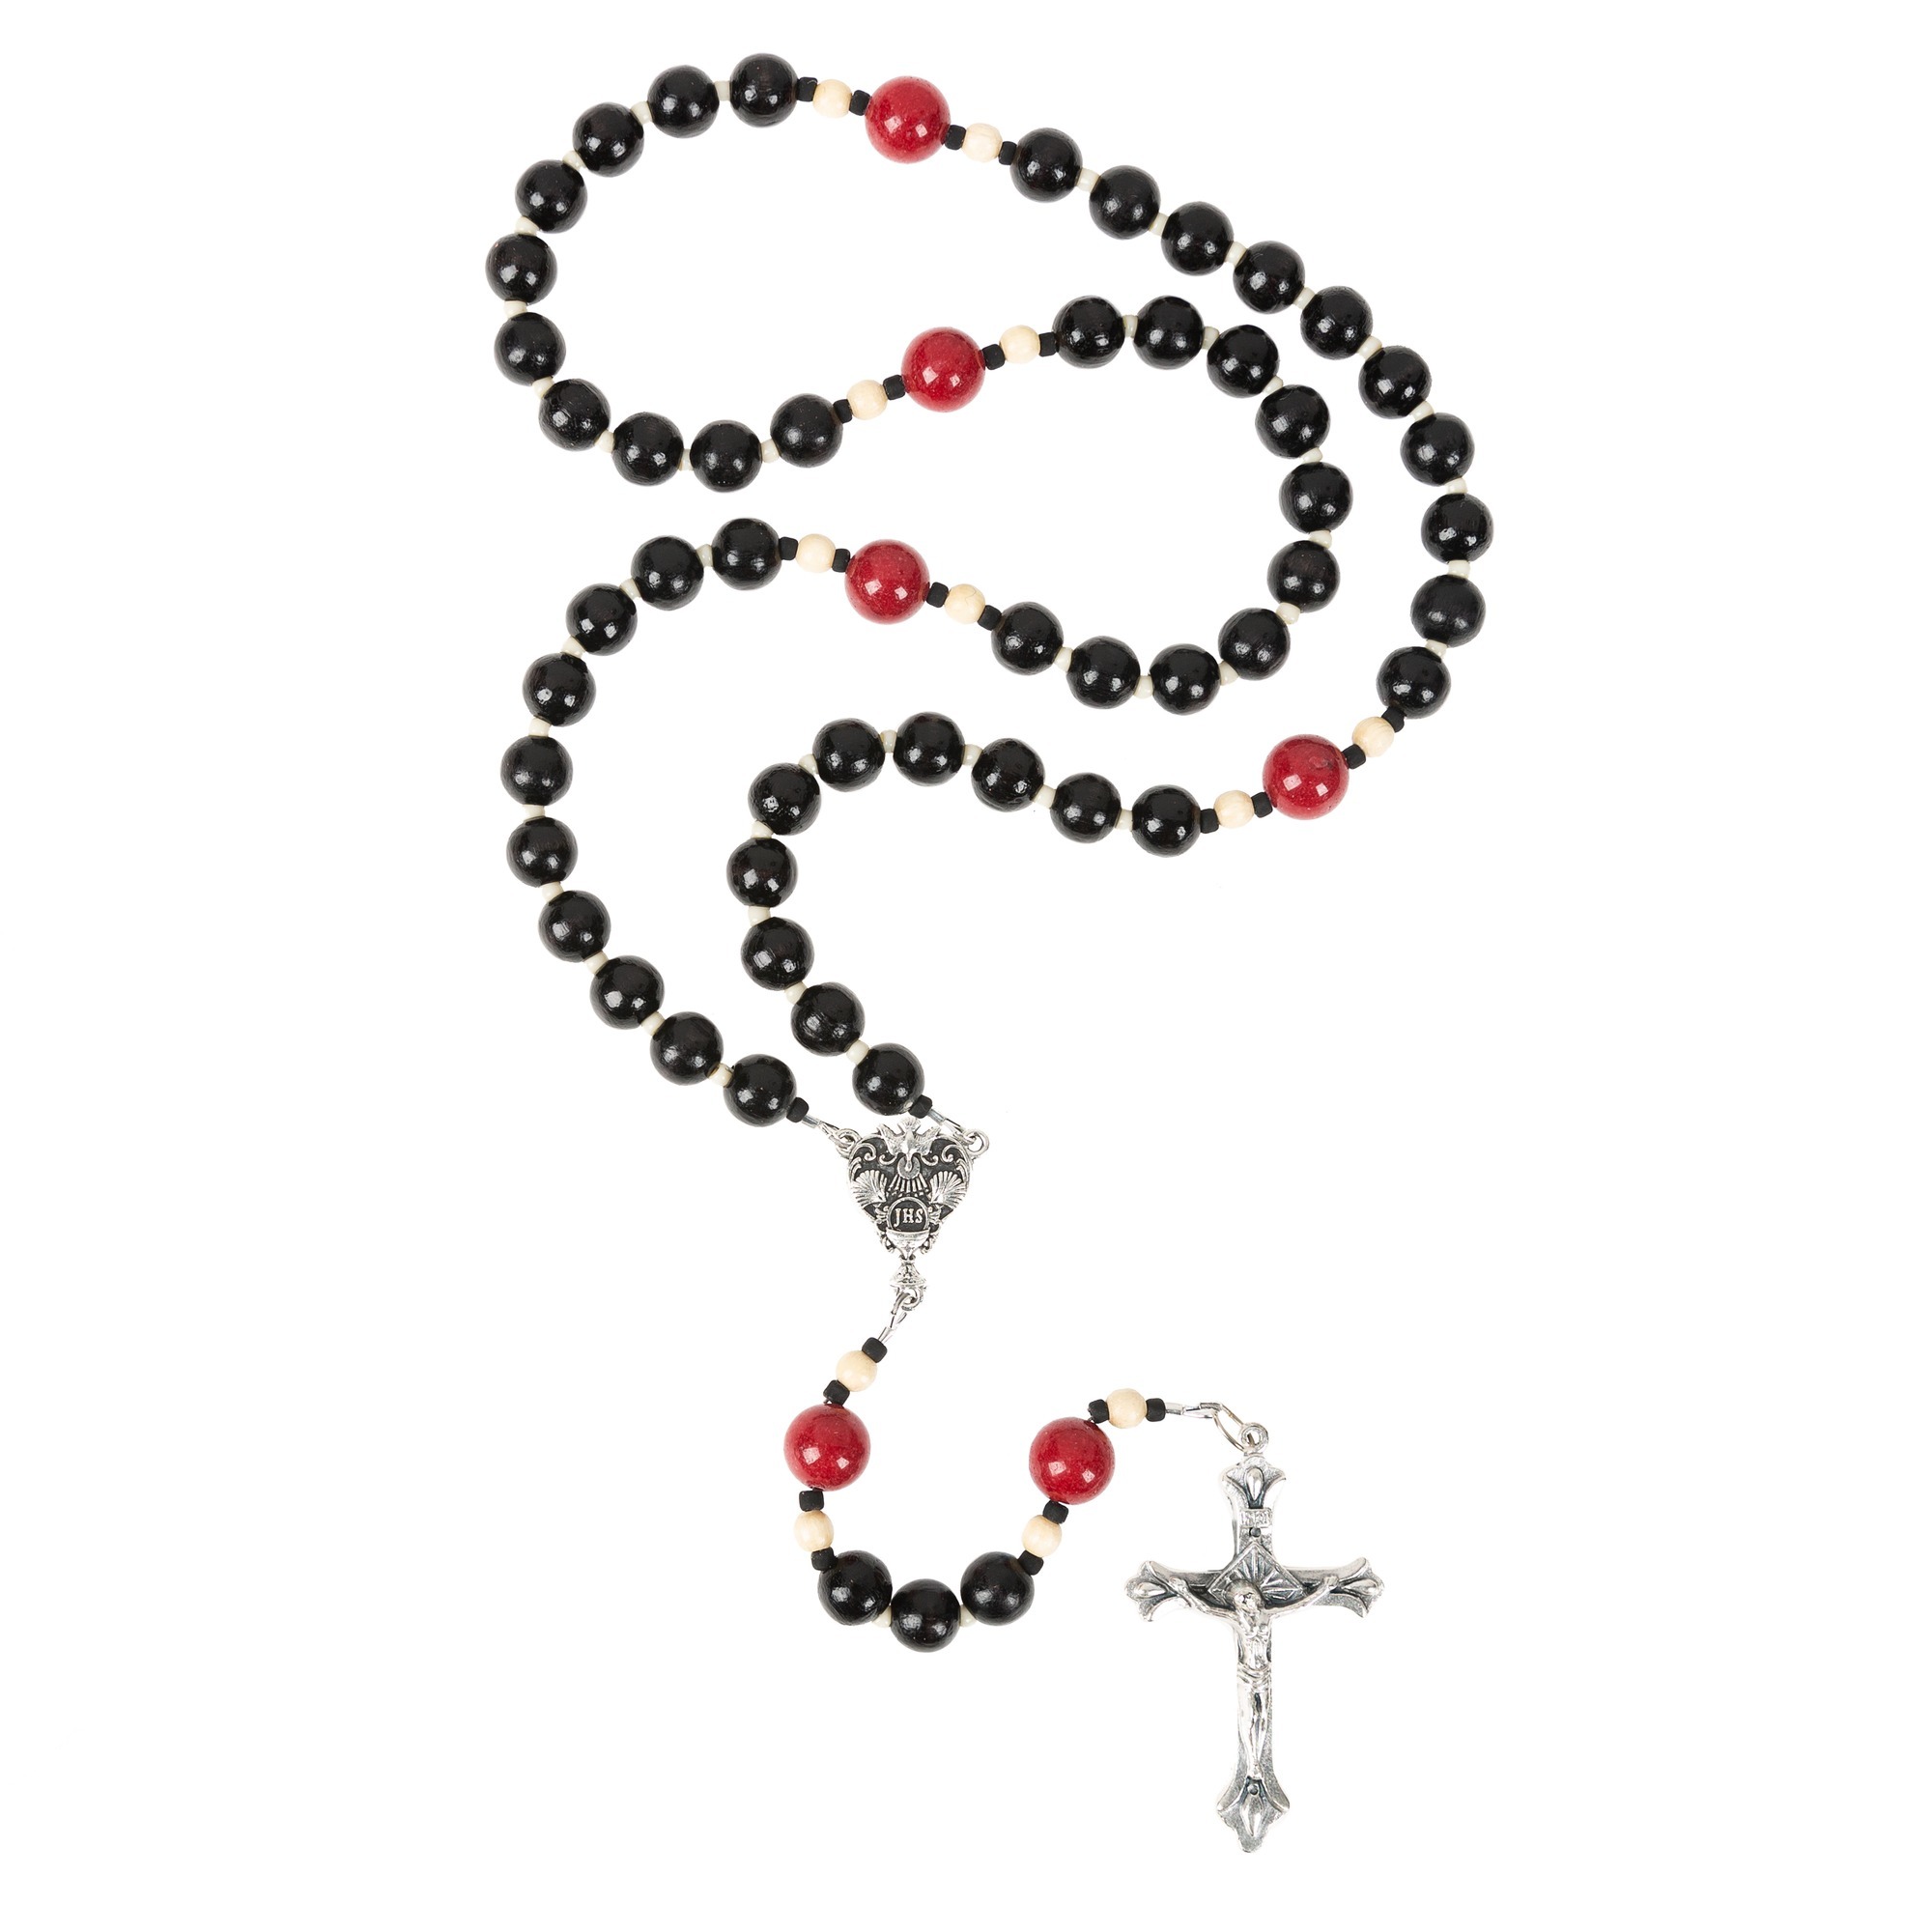 RCIA Black Wood Rosary with Prayer Card | Rosary.com™